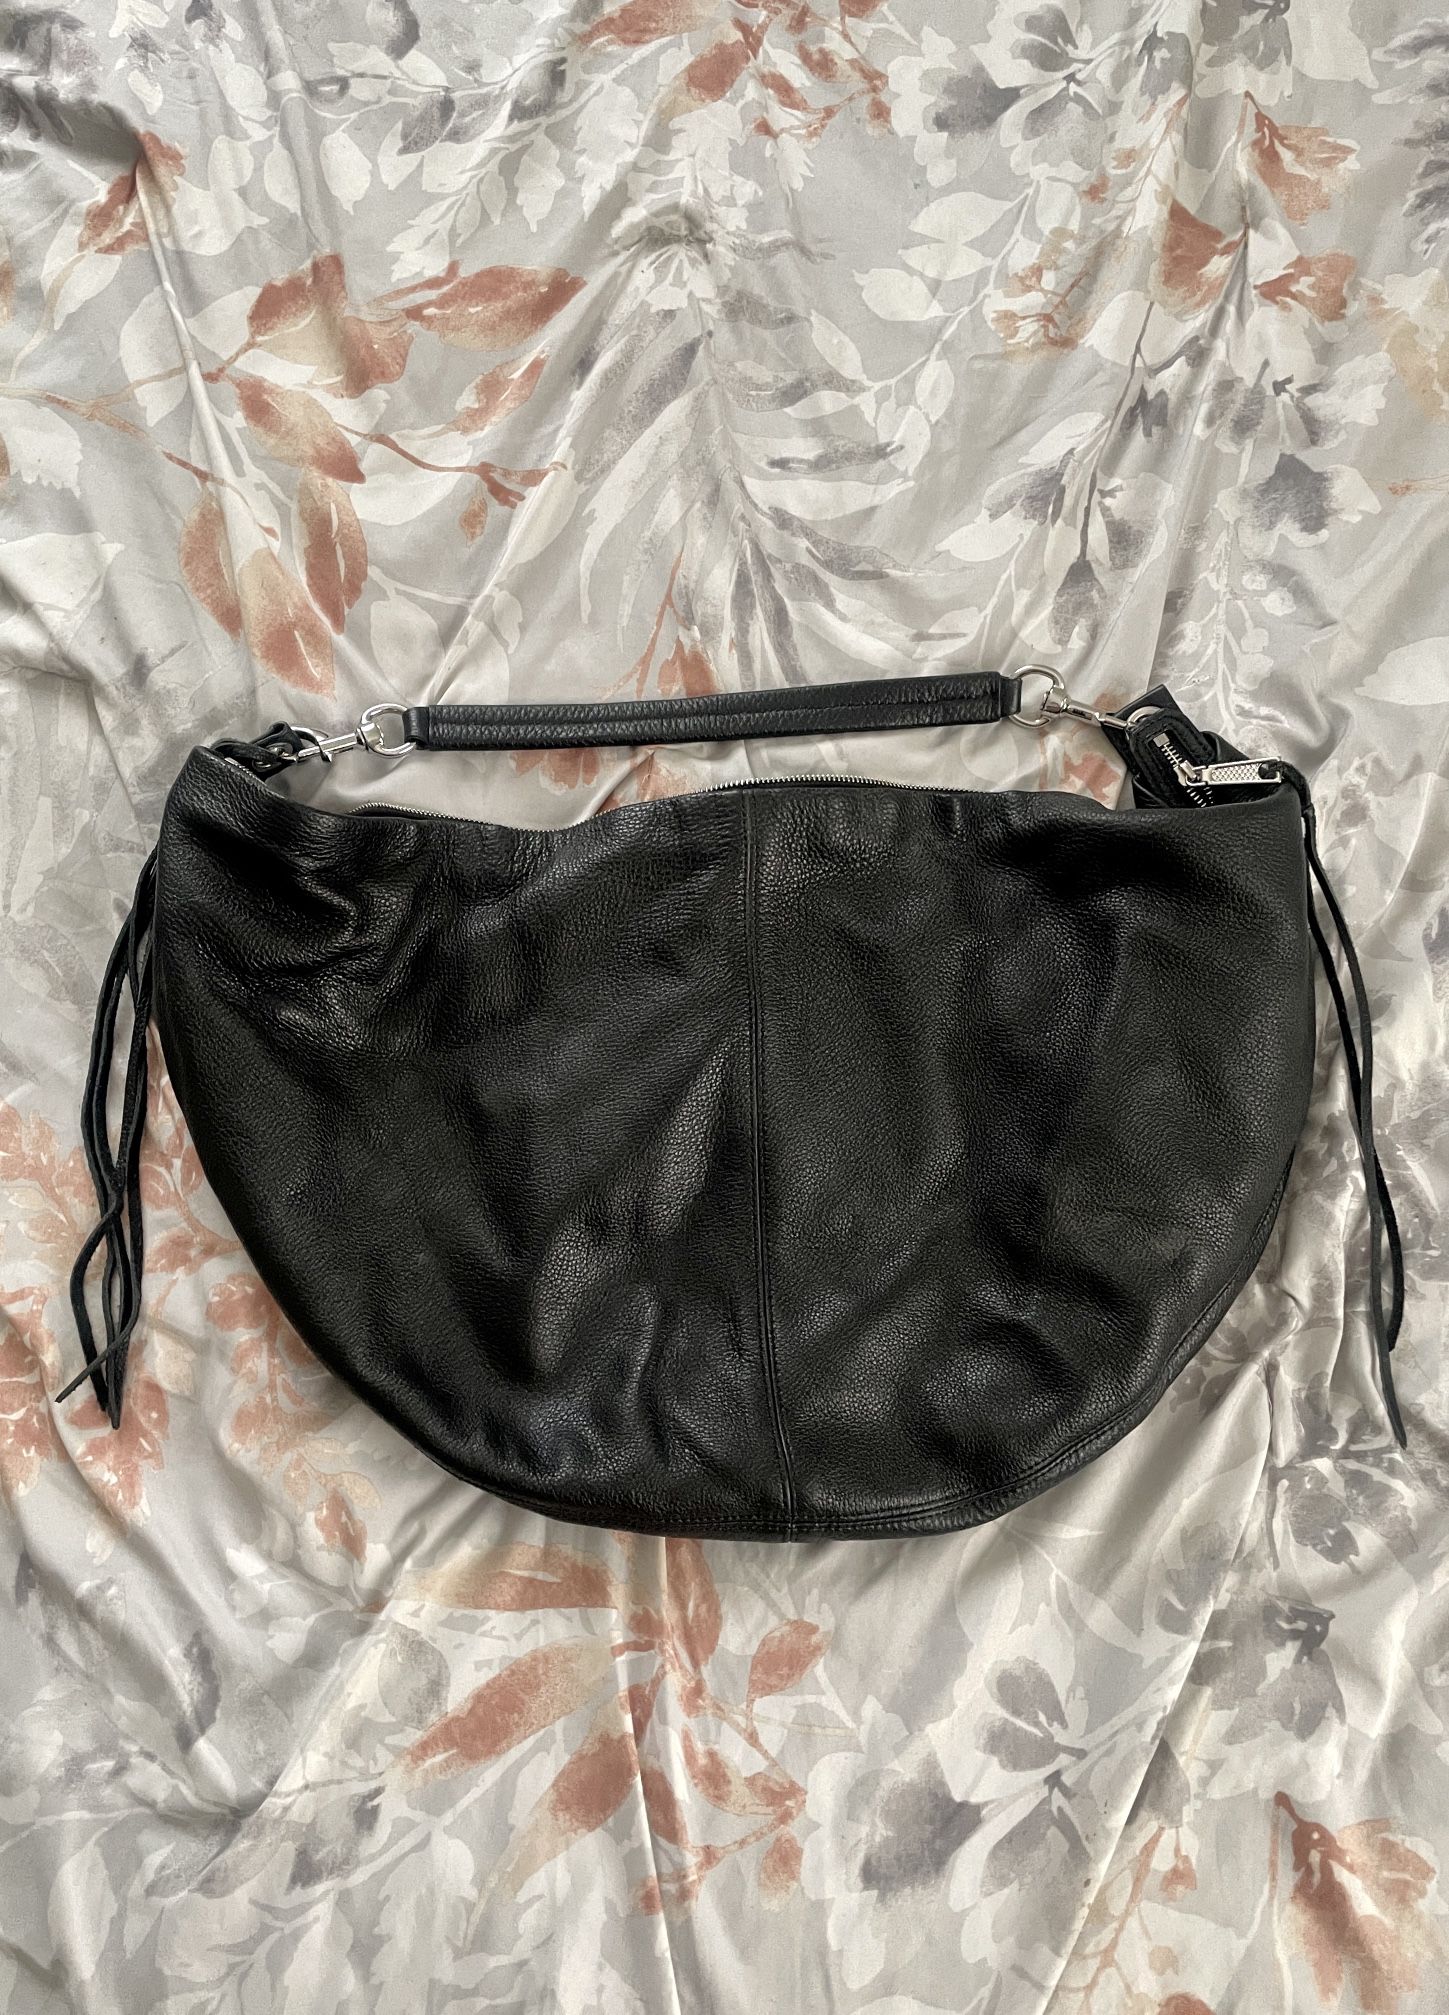 REBECCAMINKOFF Genuine Leather Hobo Bag